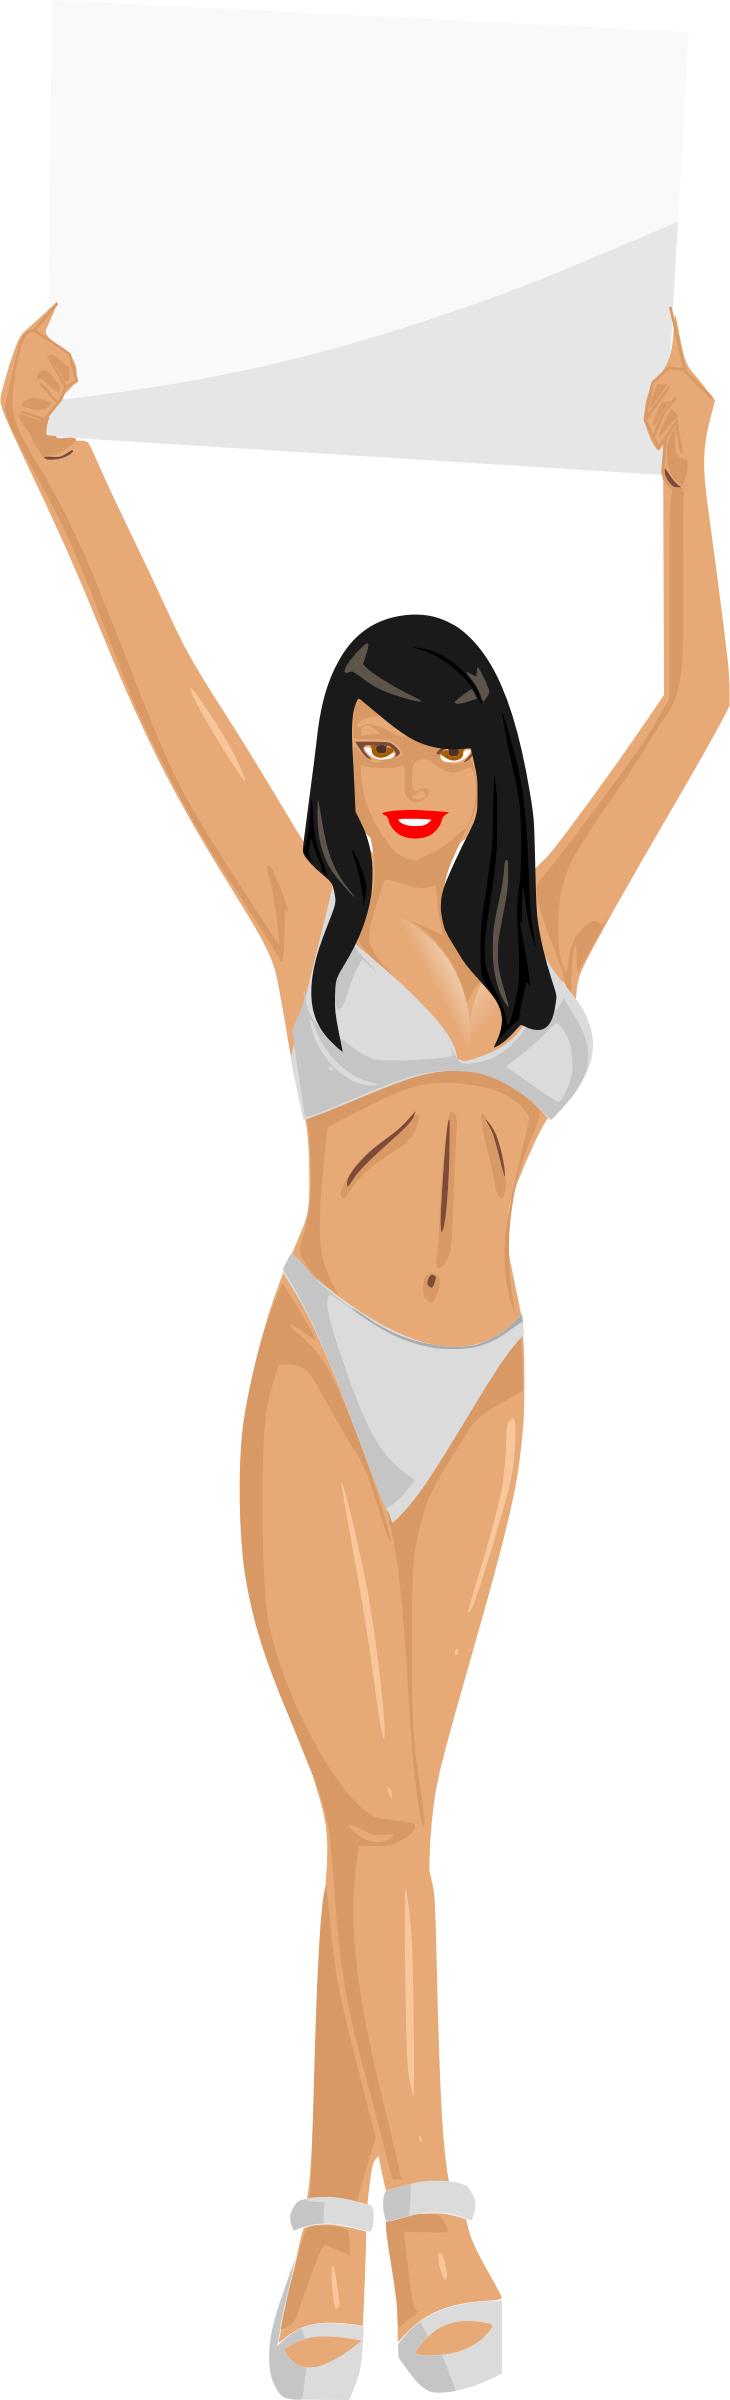 Girl with sign (white bikini, black hair, light skin) png